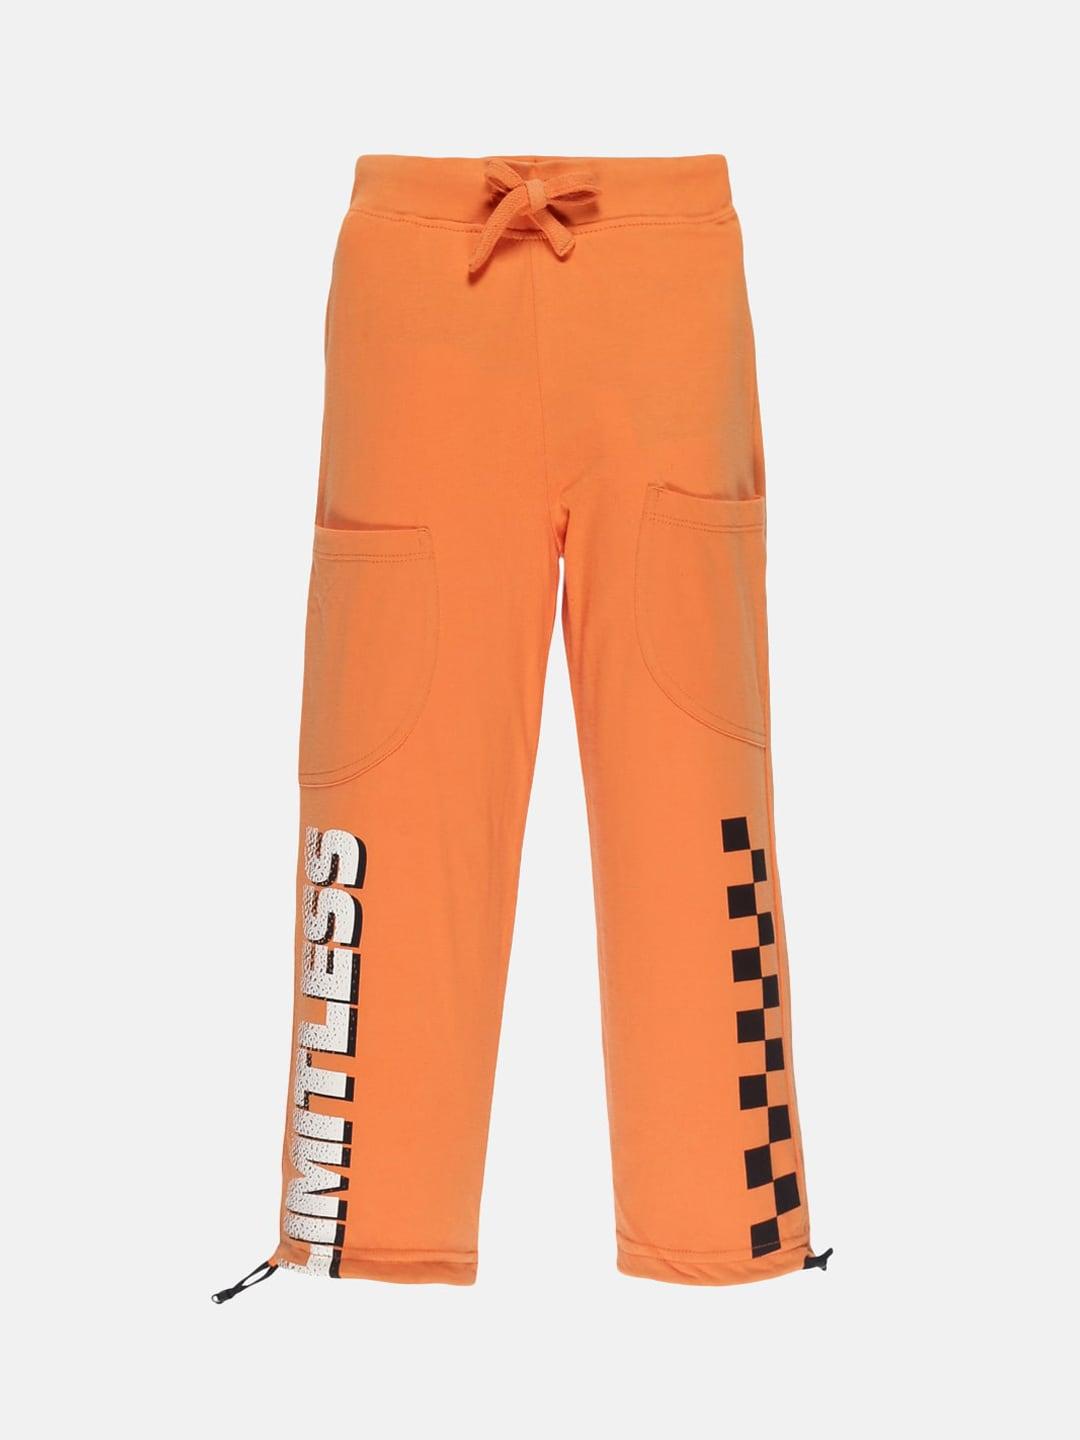 kiddopanti boys orange-colored printed pure cotton track pants